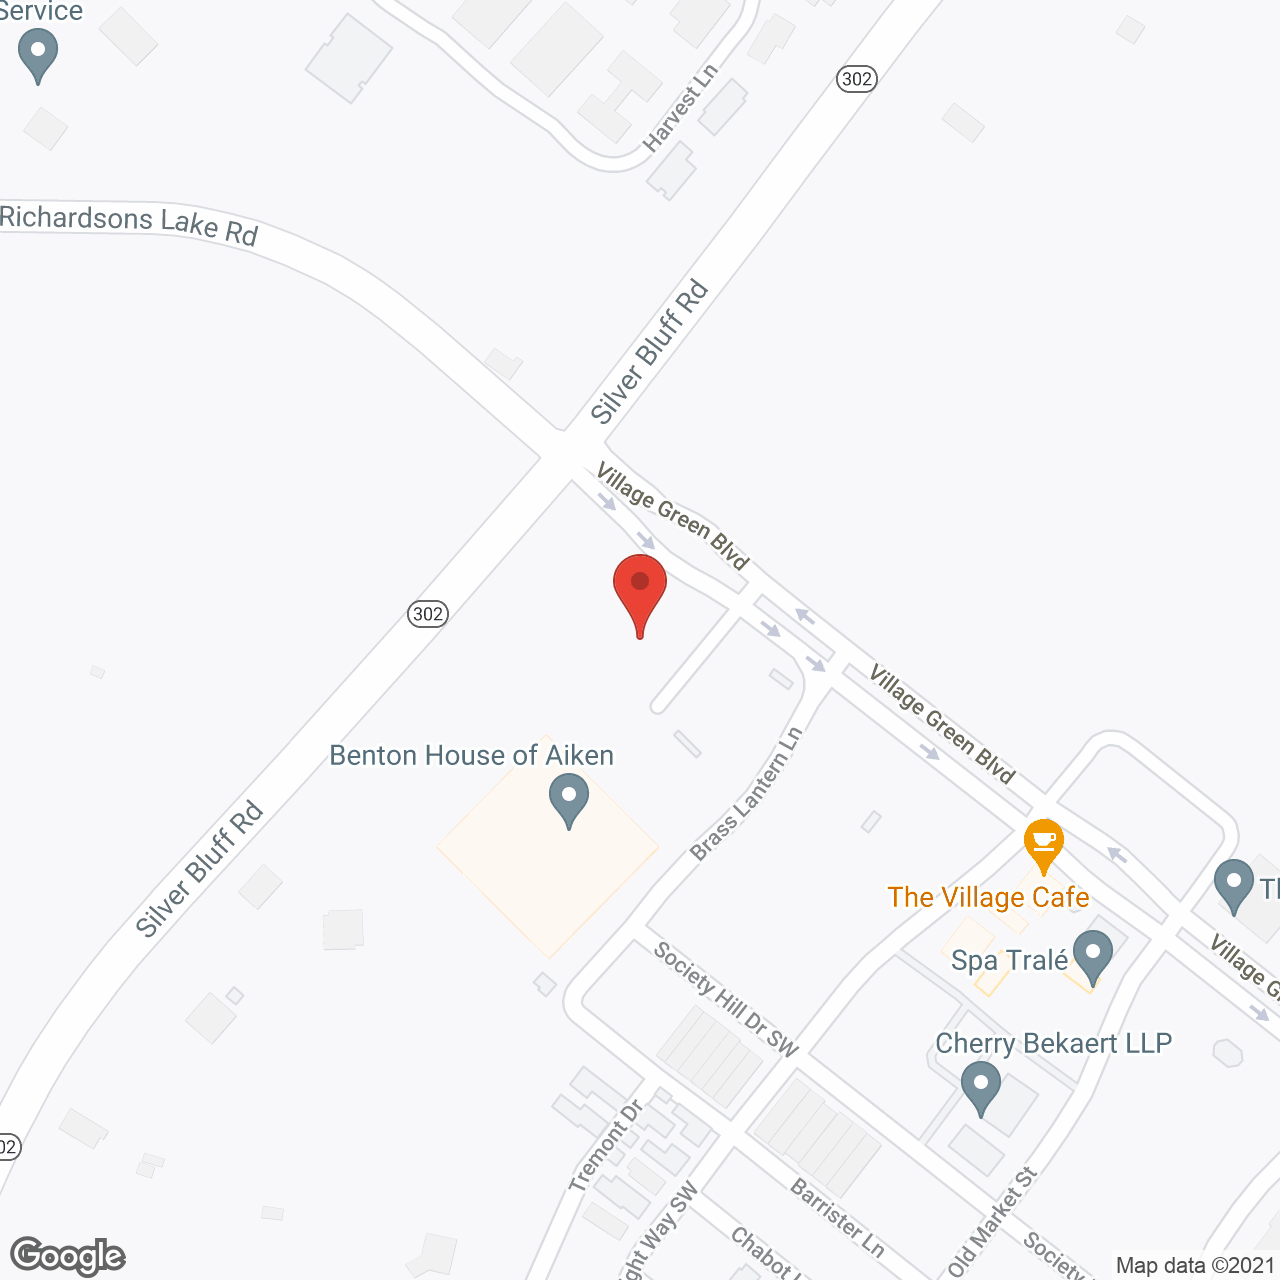 Benton House of Aiken in google map